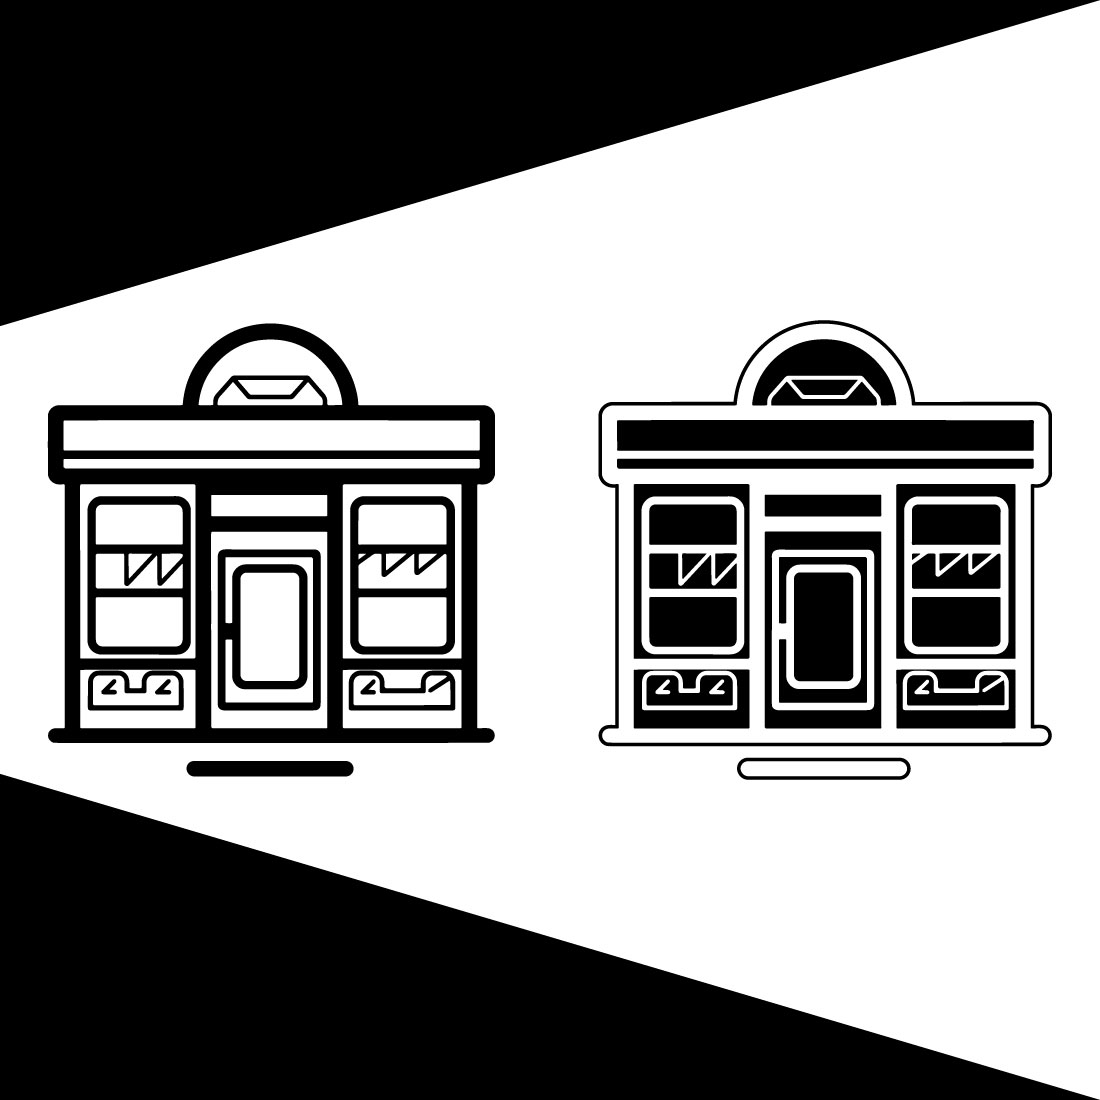 shop building icon set,Online store flat line icon set Vector illustration included symbols preview image.